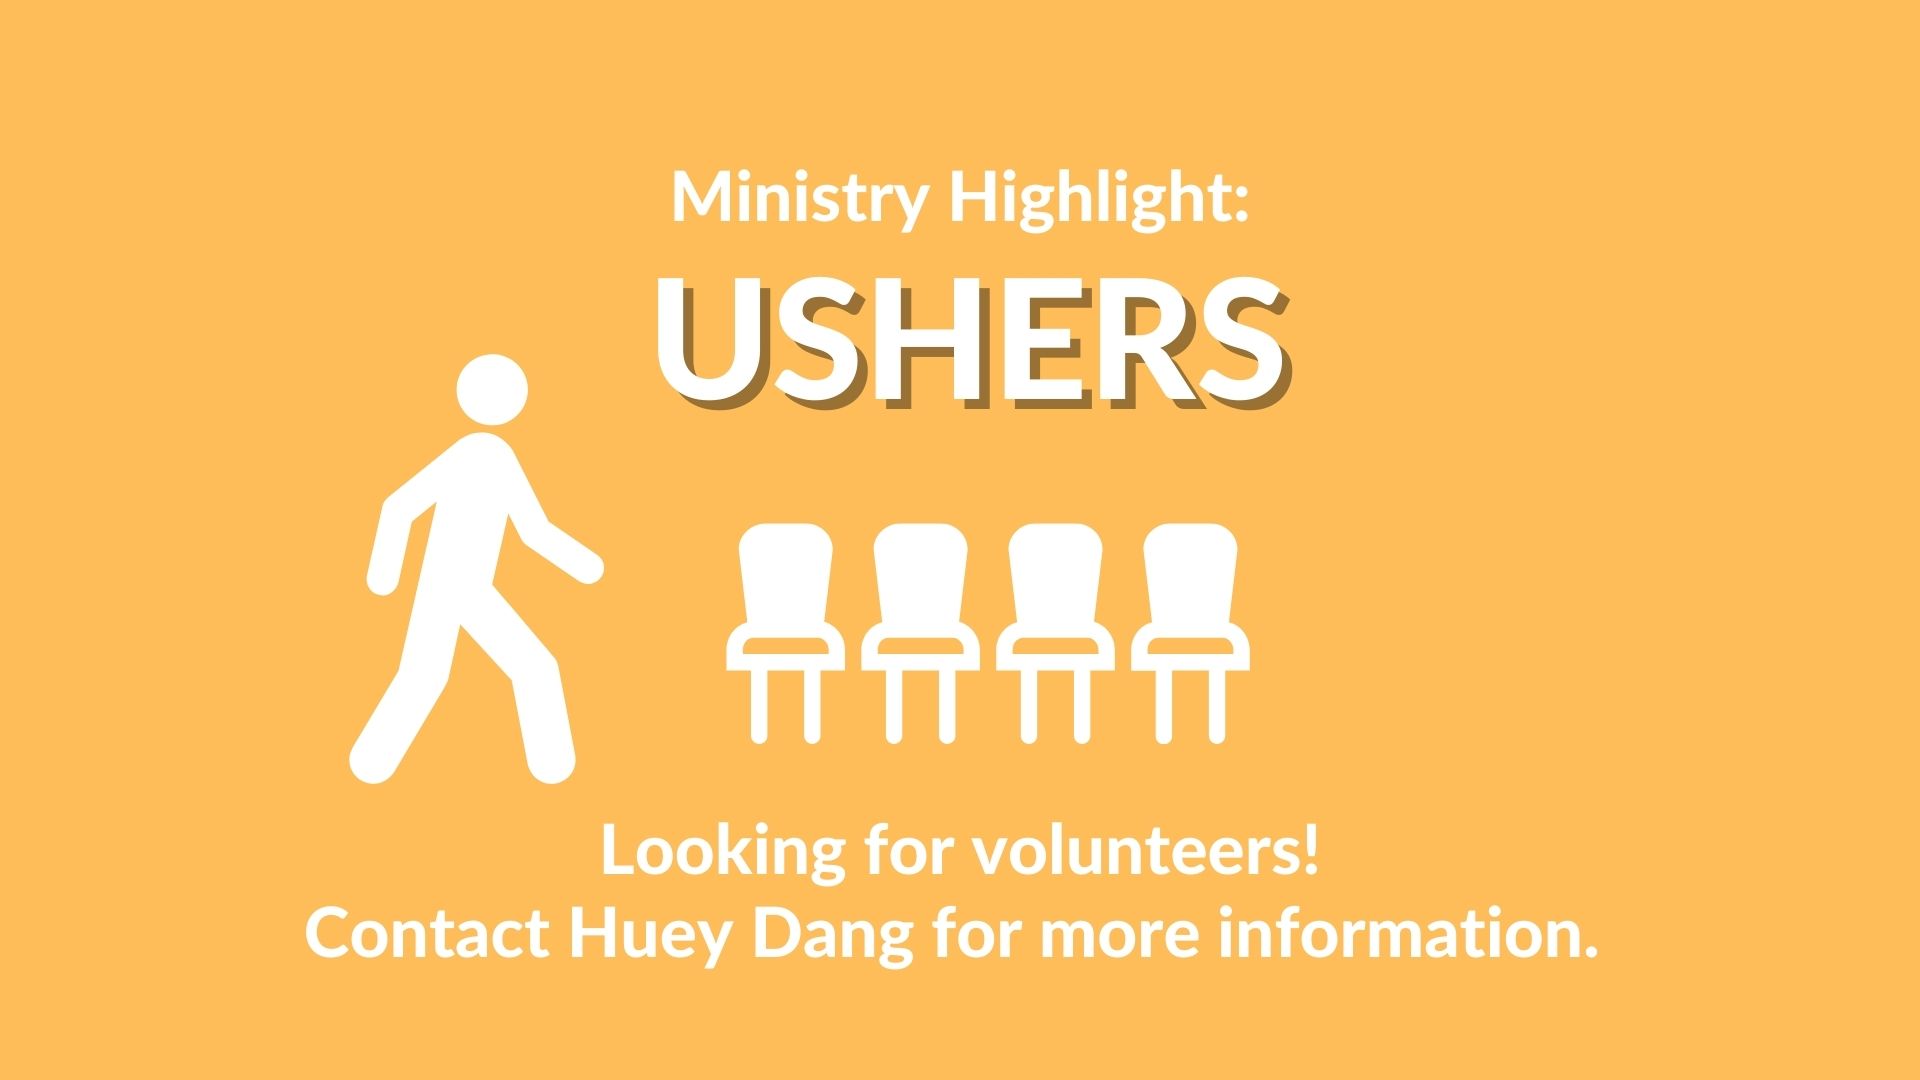 Ministry Highlight: Ushers